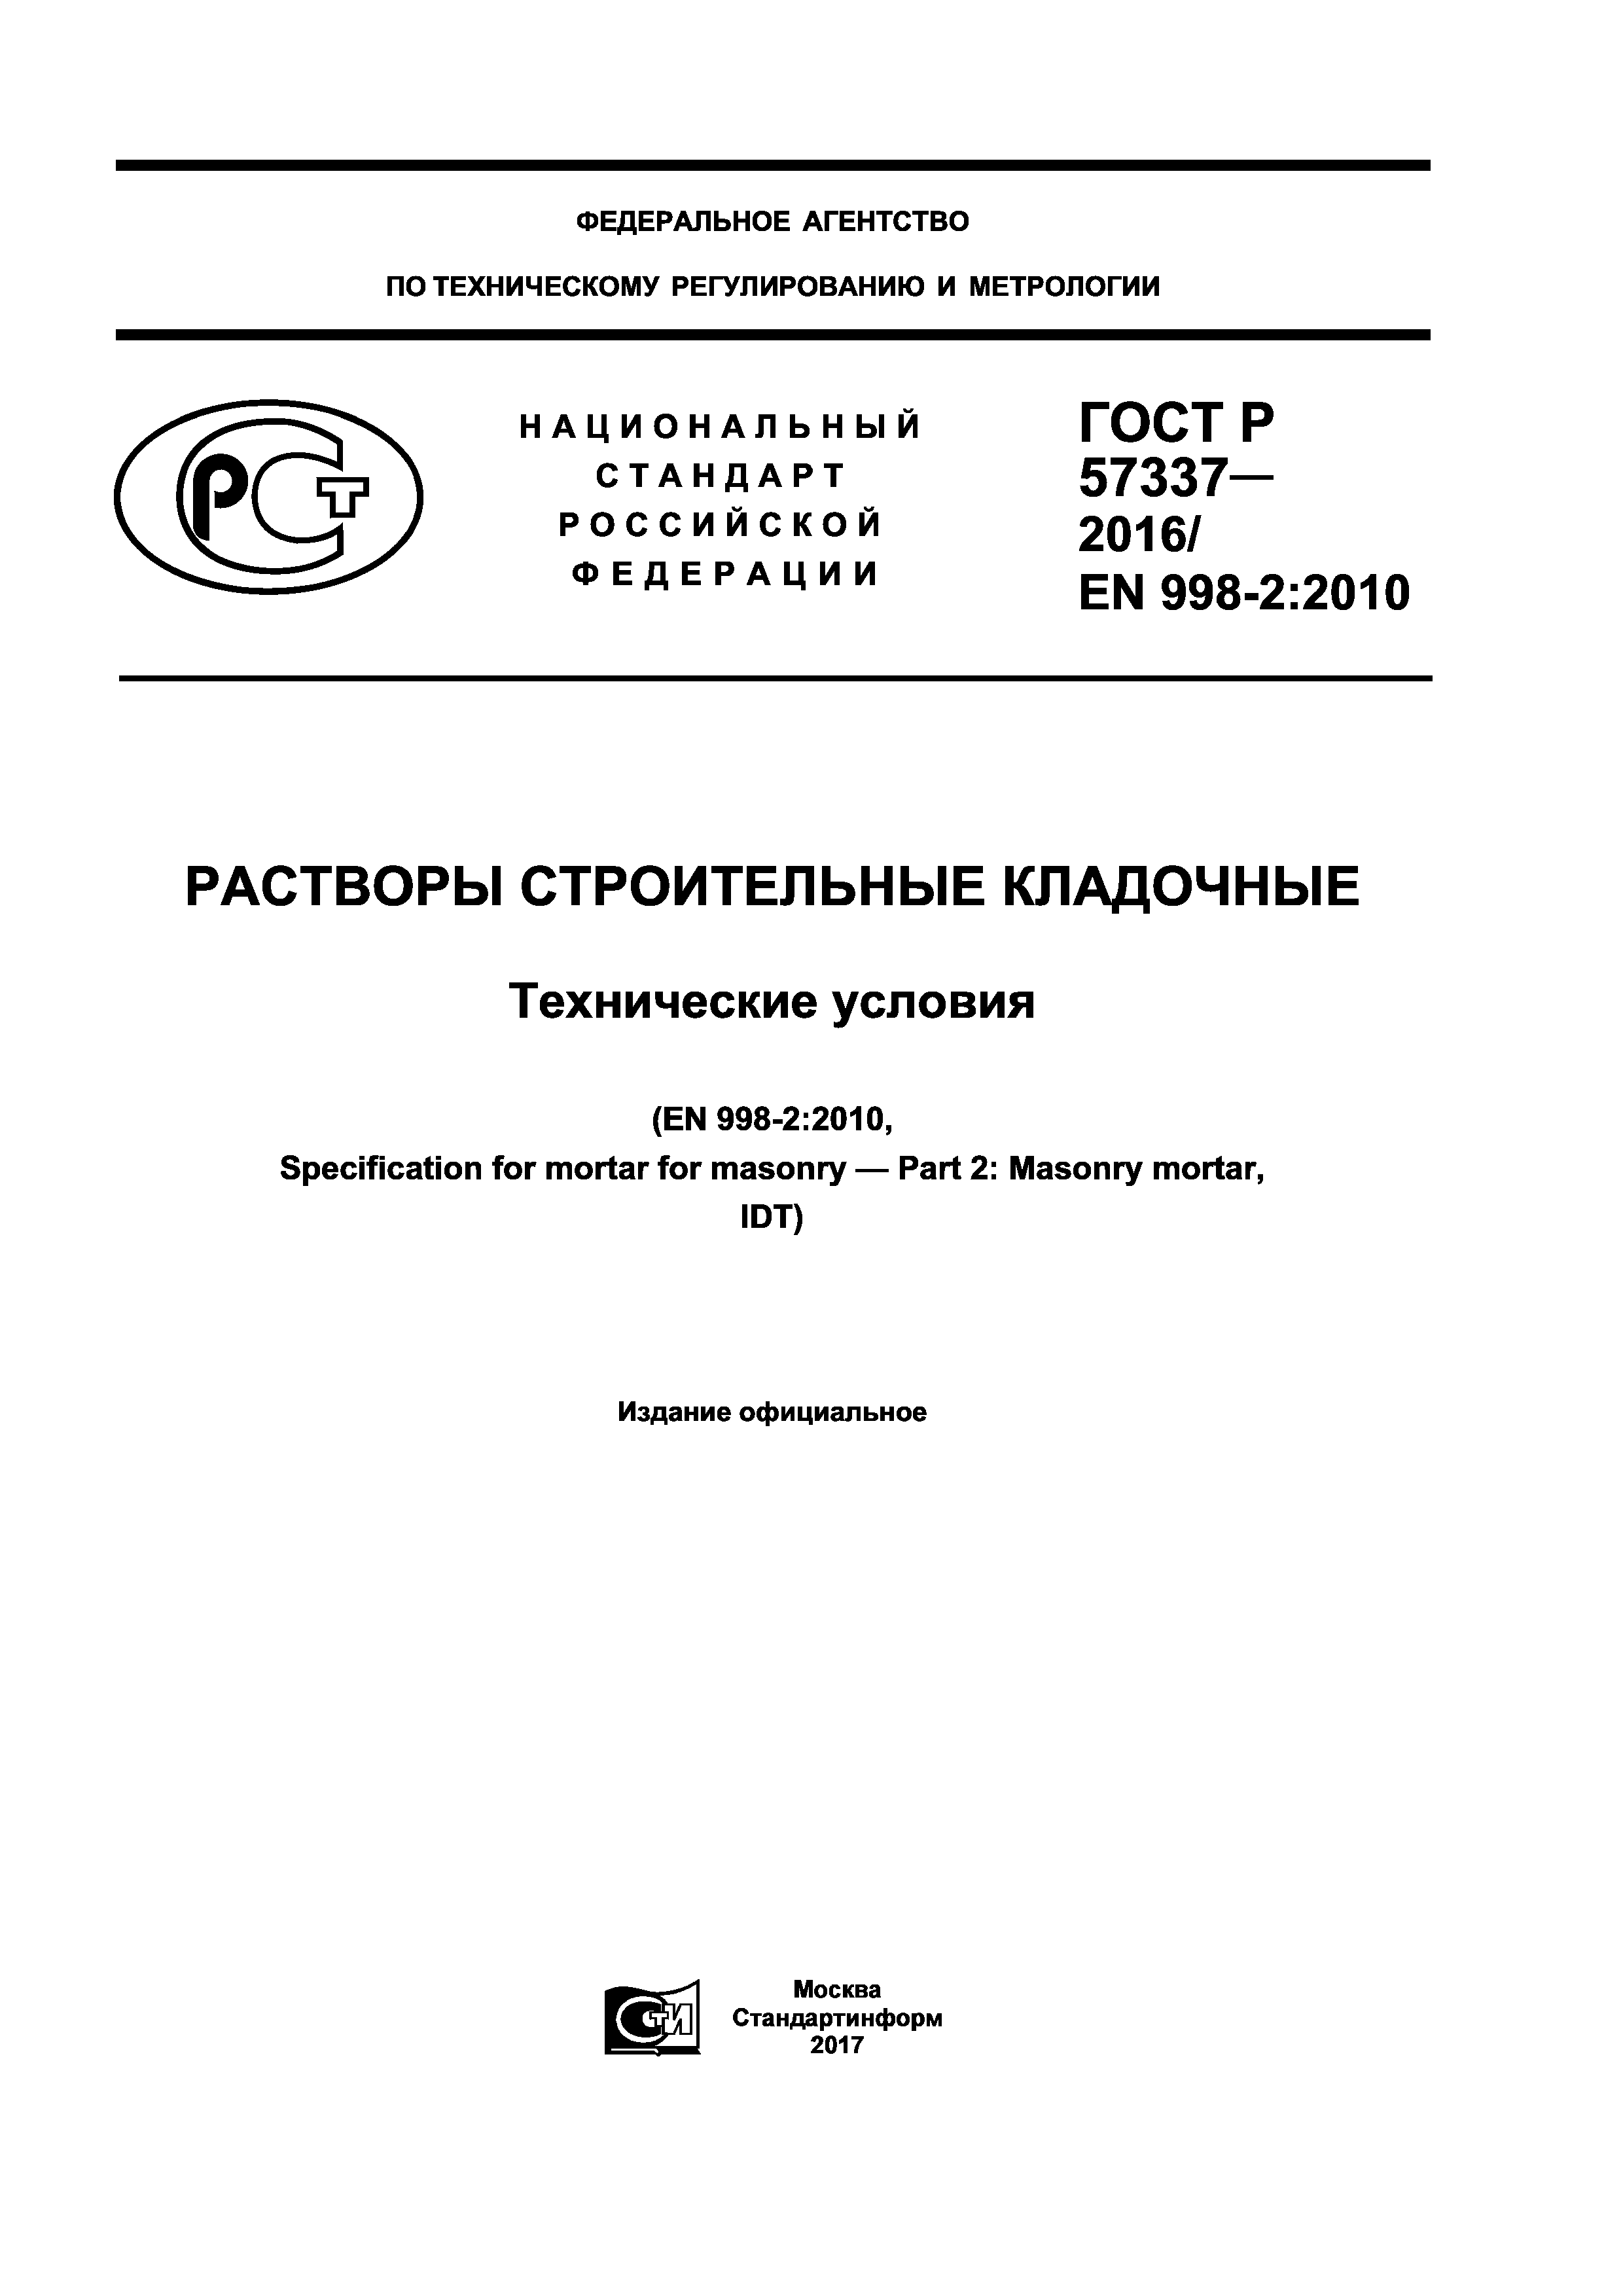 ГОСТ Р 57337-2016